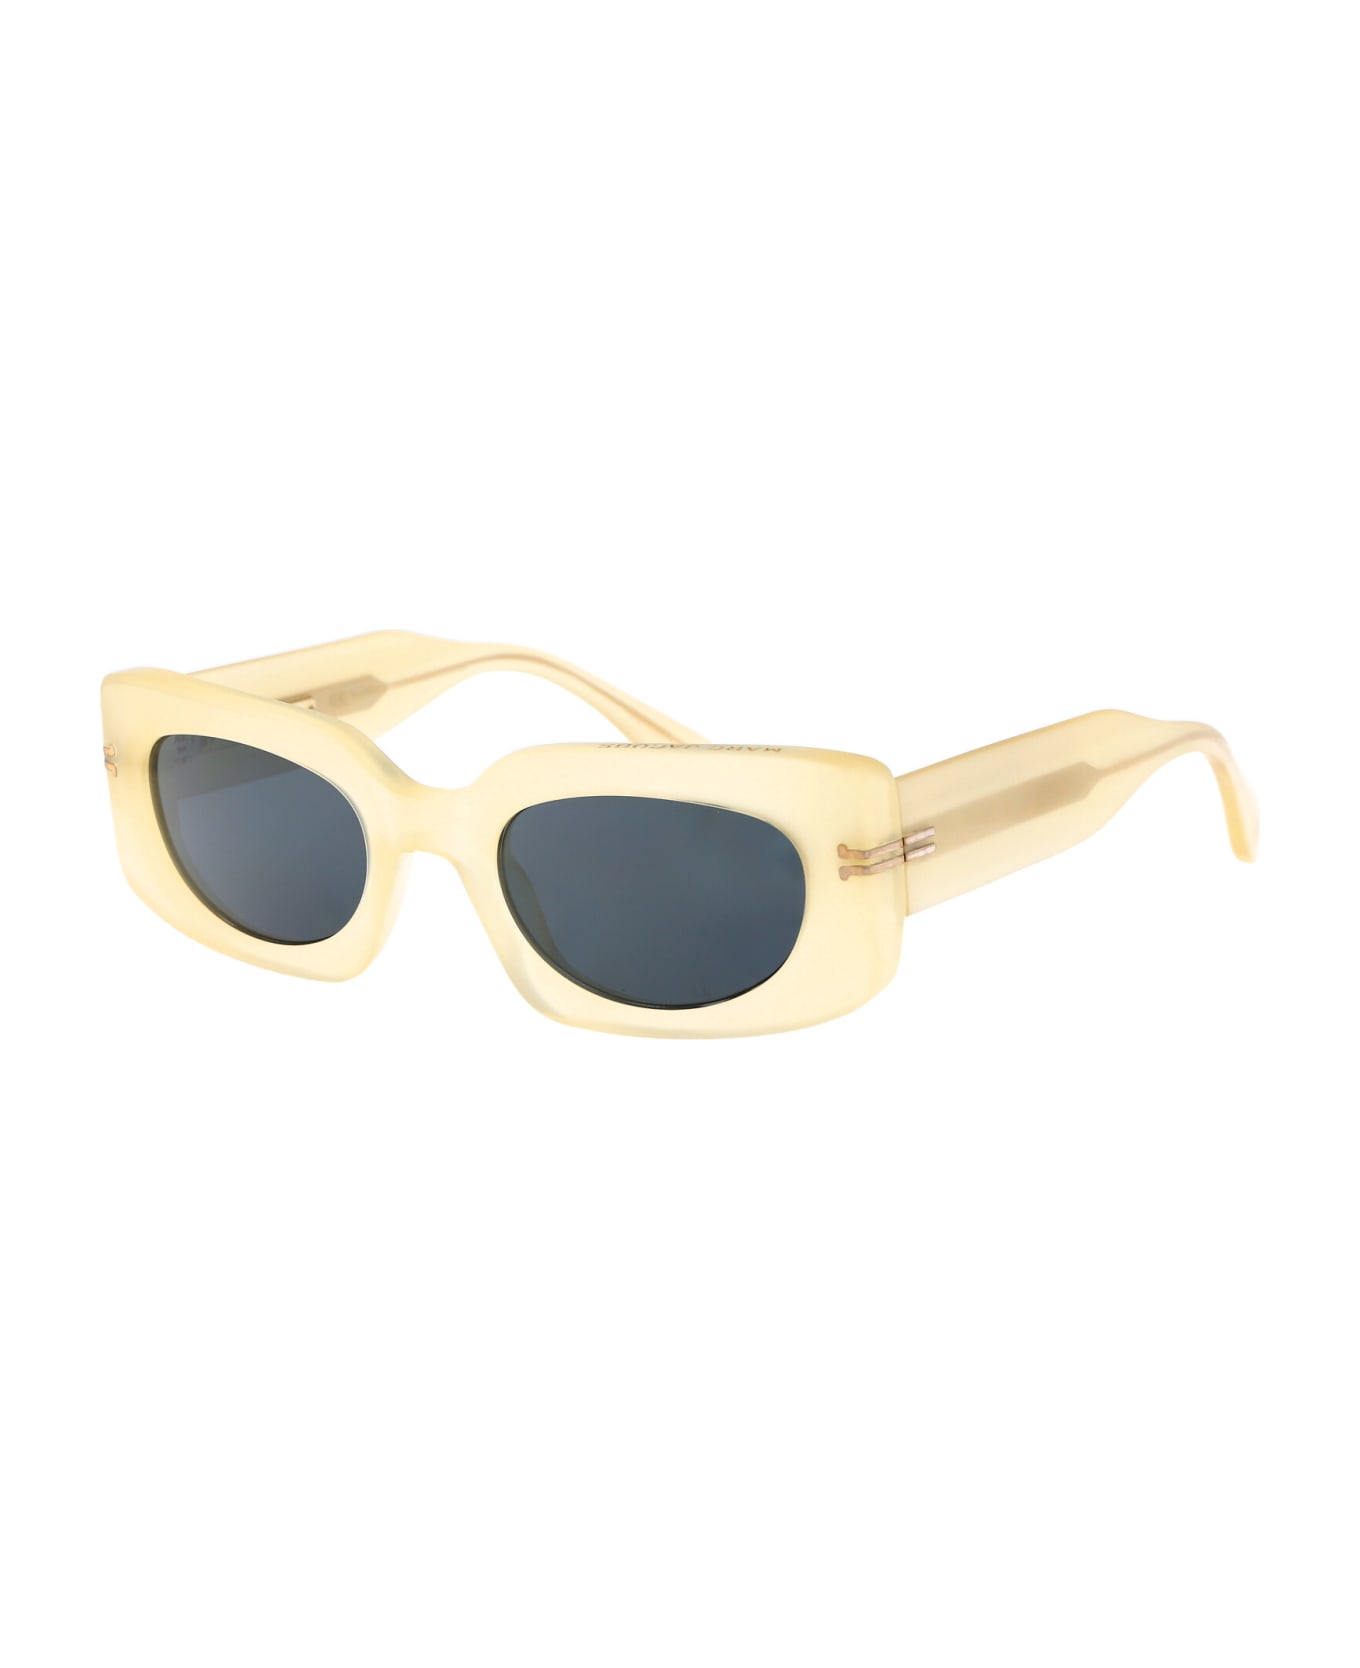 Marc Jacobs Eyewear Mj 1075/s Sunglasses - 40GIR YELLOW